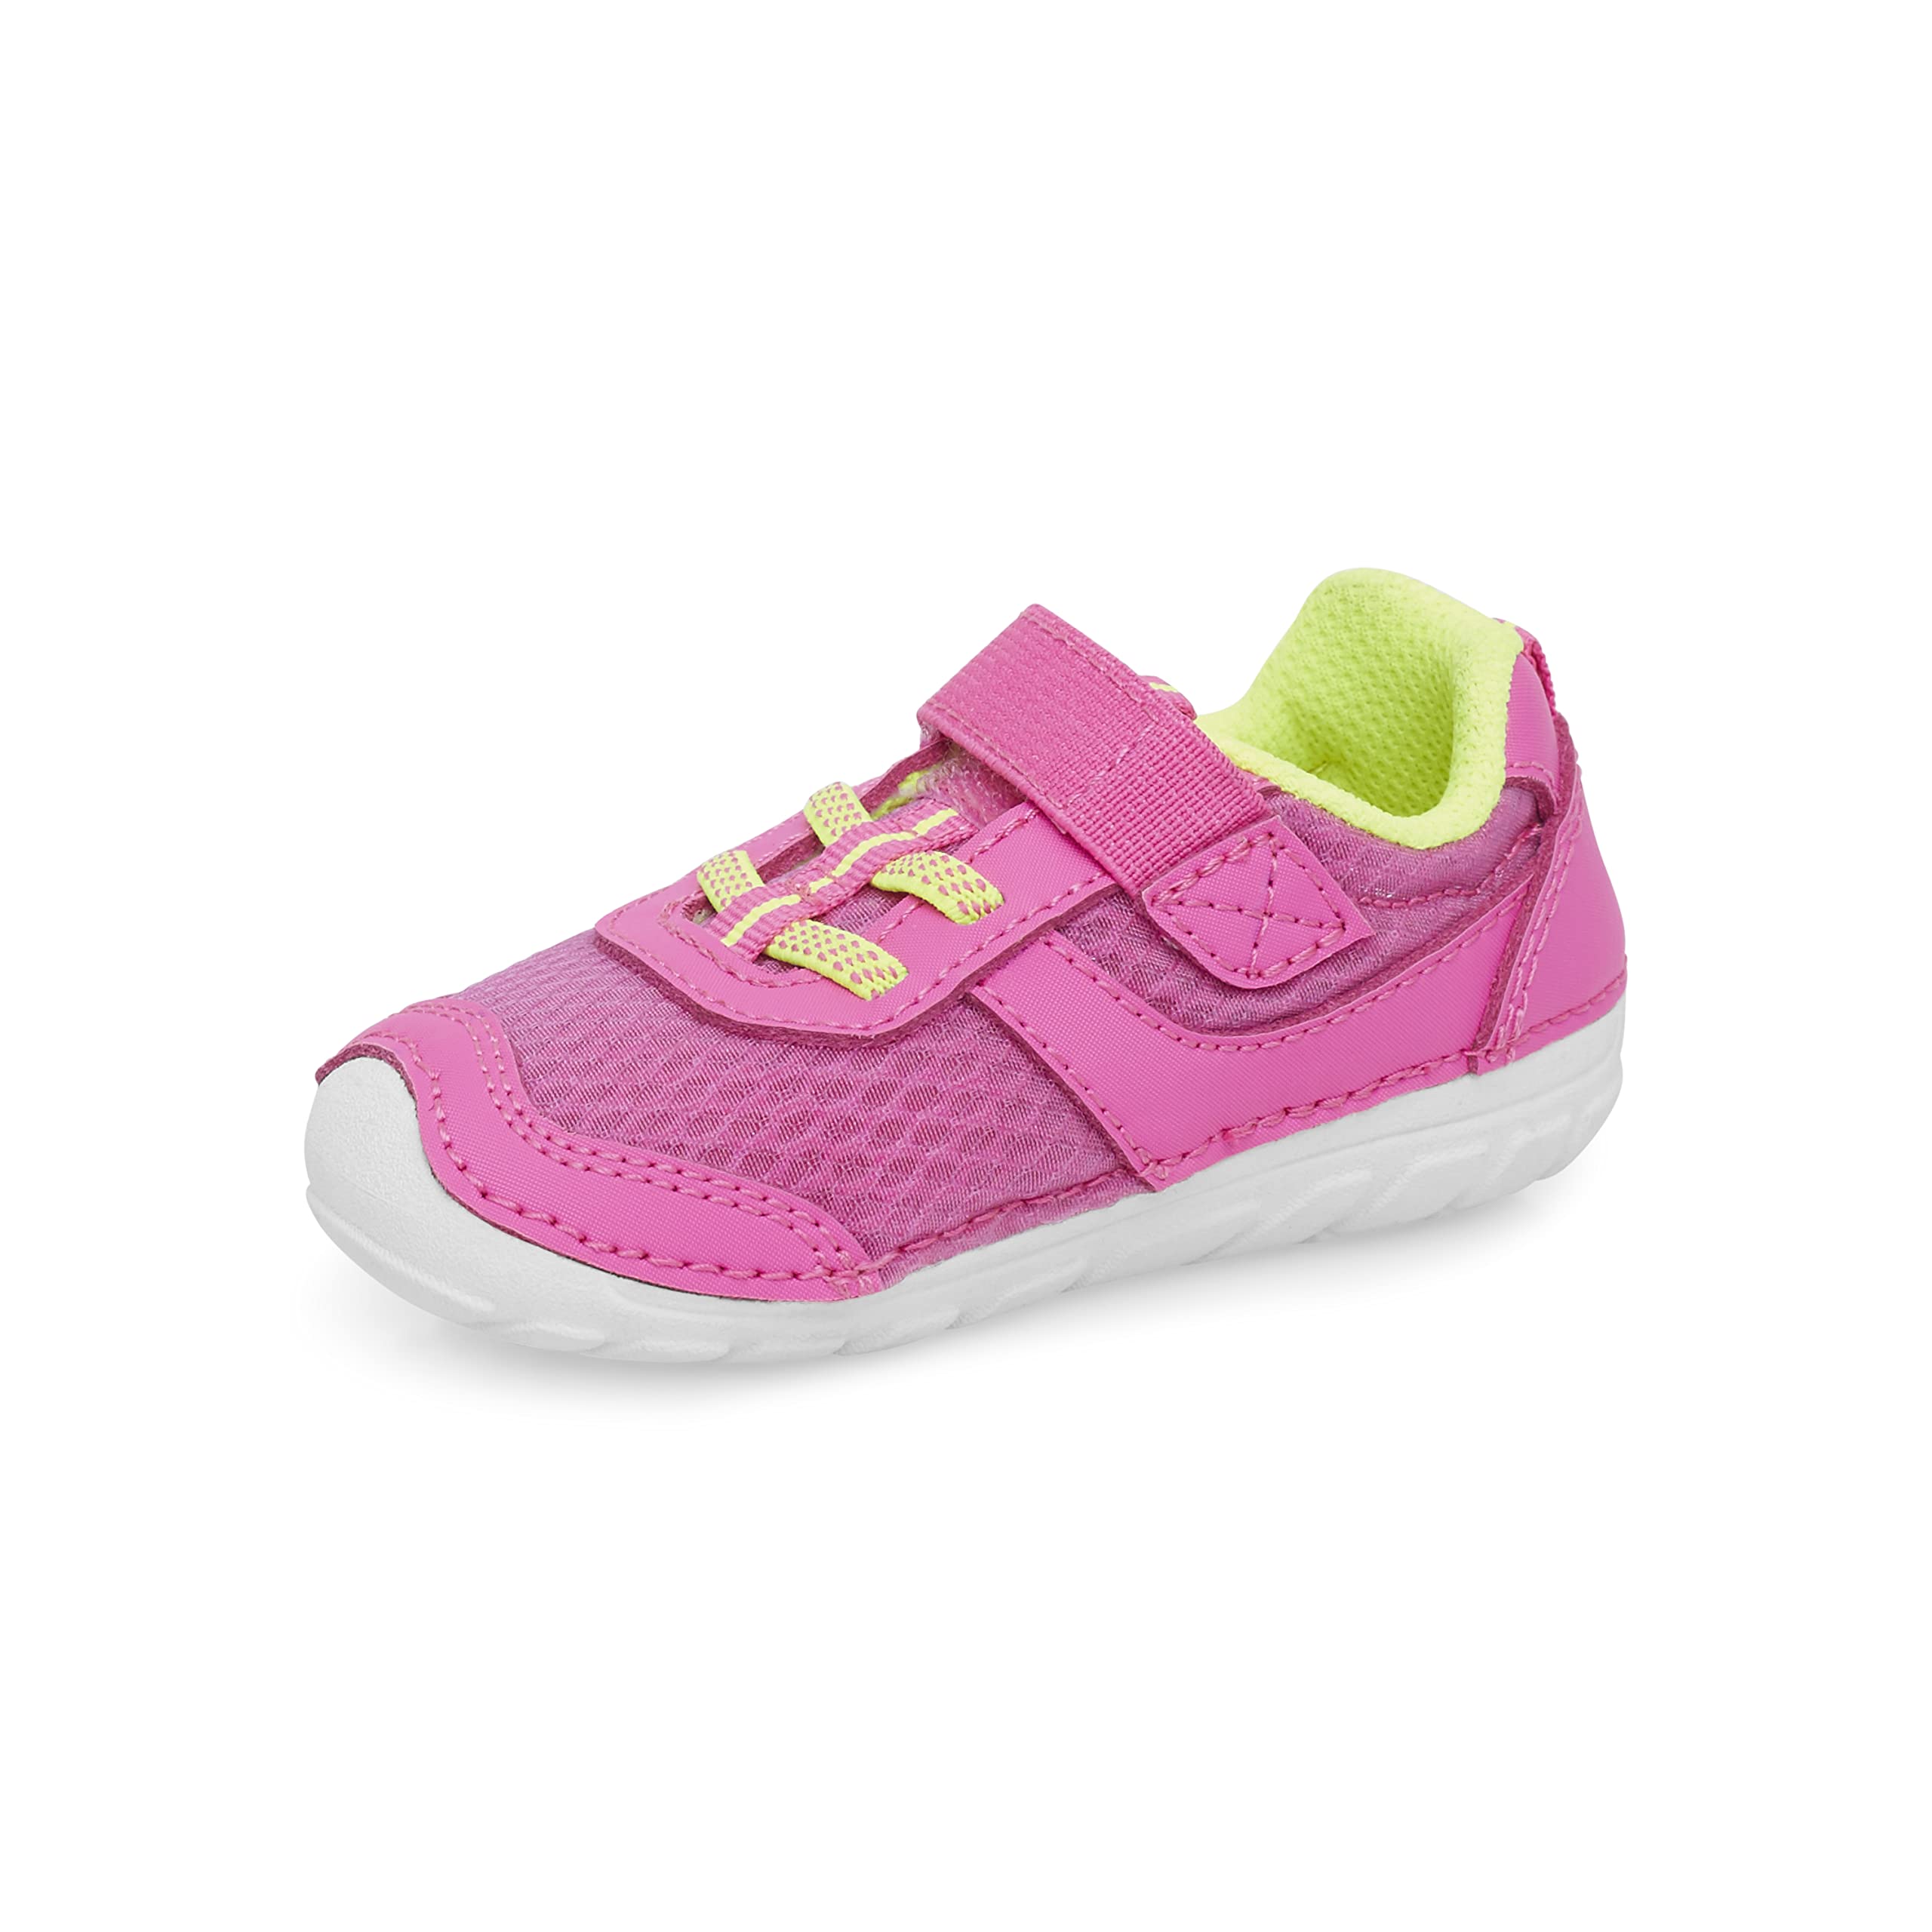 Stride Rite Baby Soft Motion Zips Runner Sneaker, Hot Pink, 5 Wide US Unisex Infant